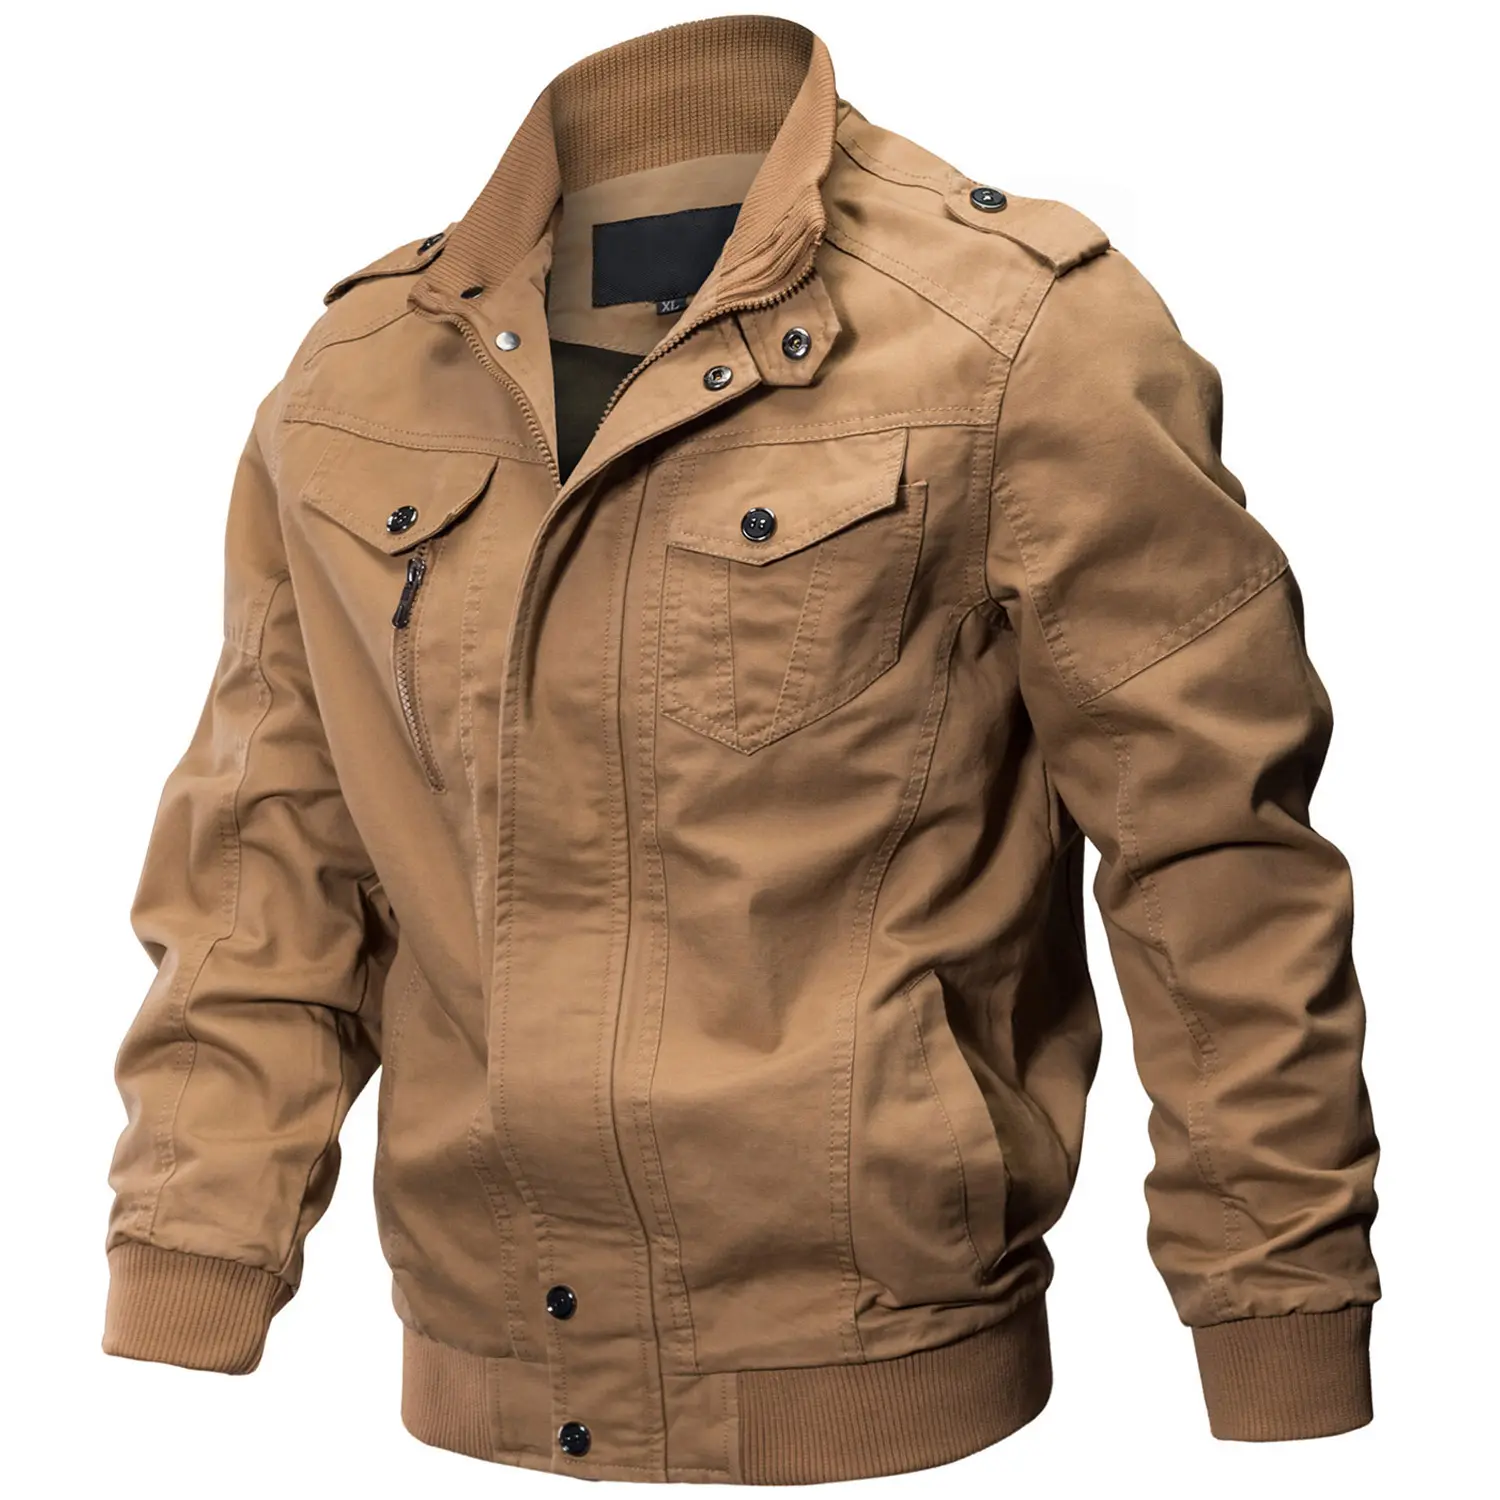 Pakaian Vintage Retro risleting penuh desain baru, dengan saku ritsleting, jaket Bomber Pilot kasual musim gugur, pakaian luar kargo